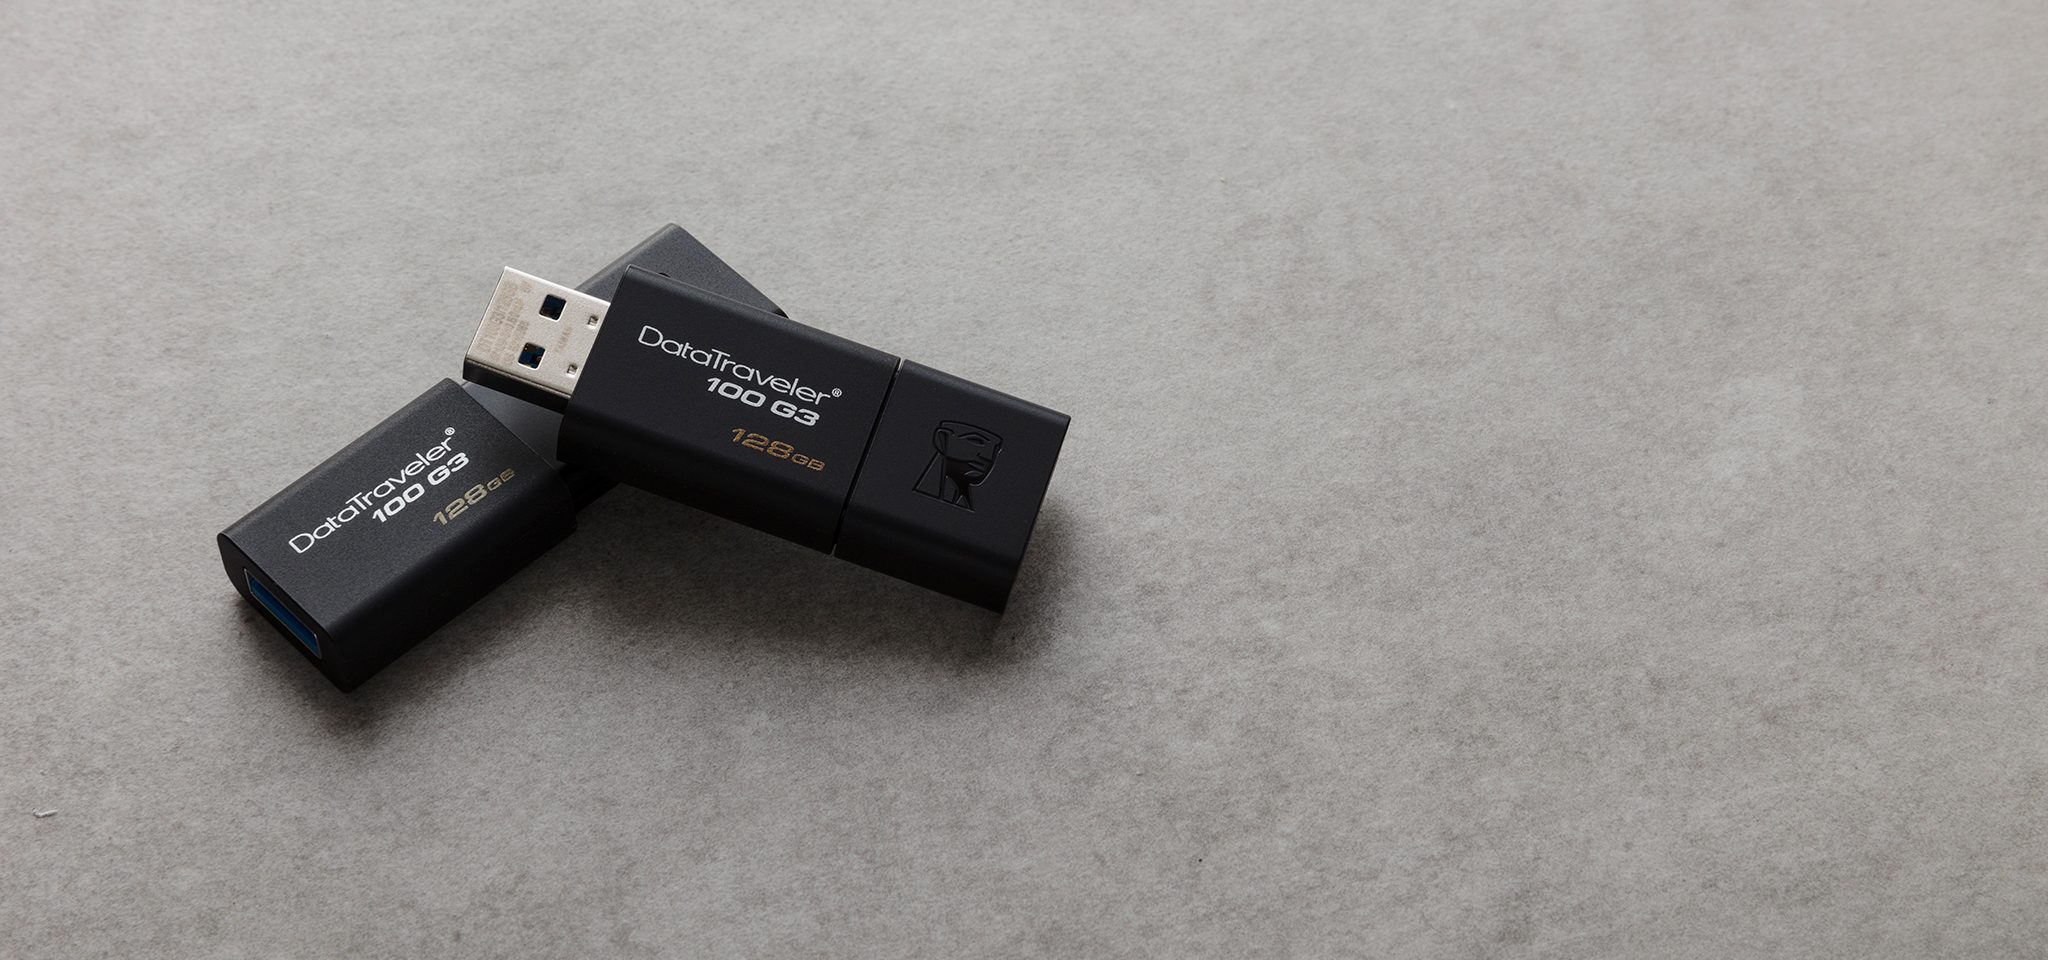 DataTraveler 100 G3 USB 3.0 Flash Drive